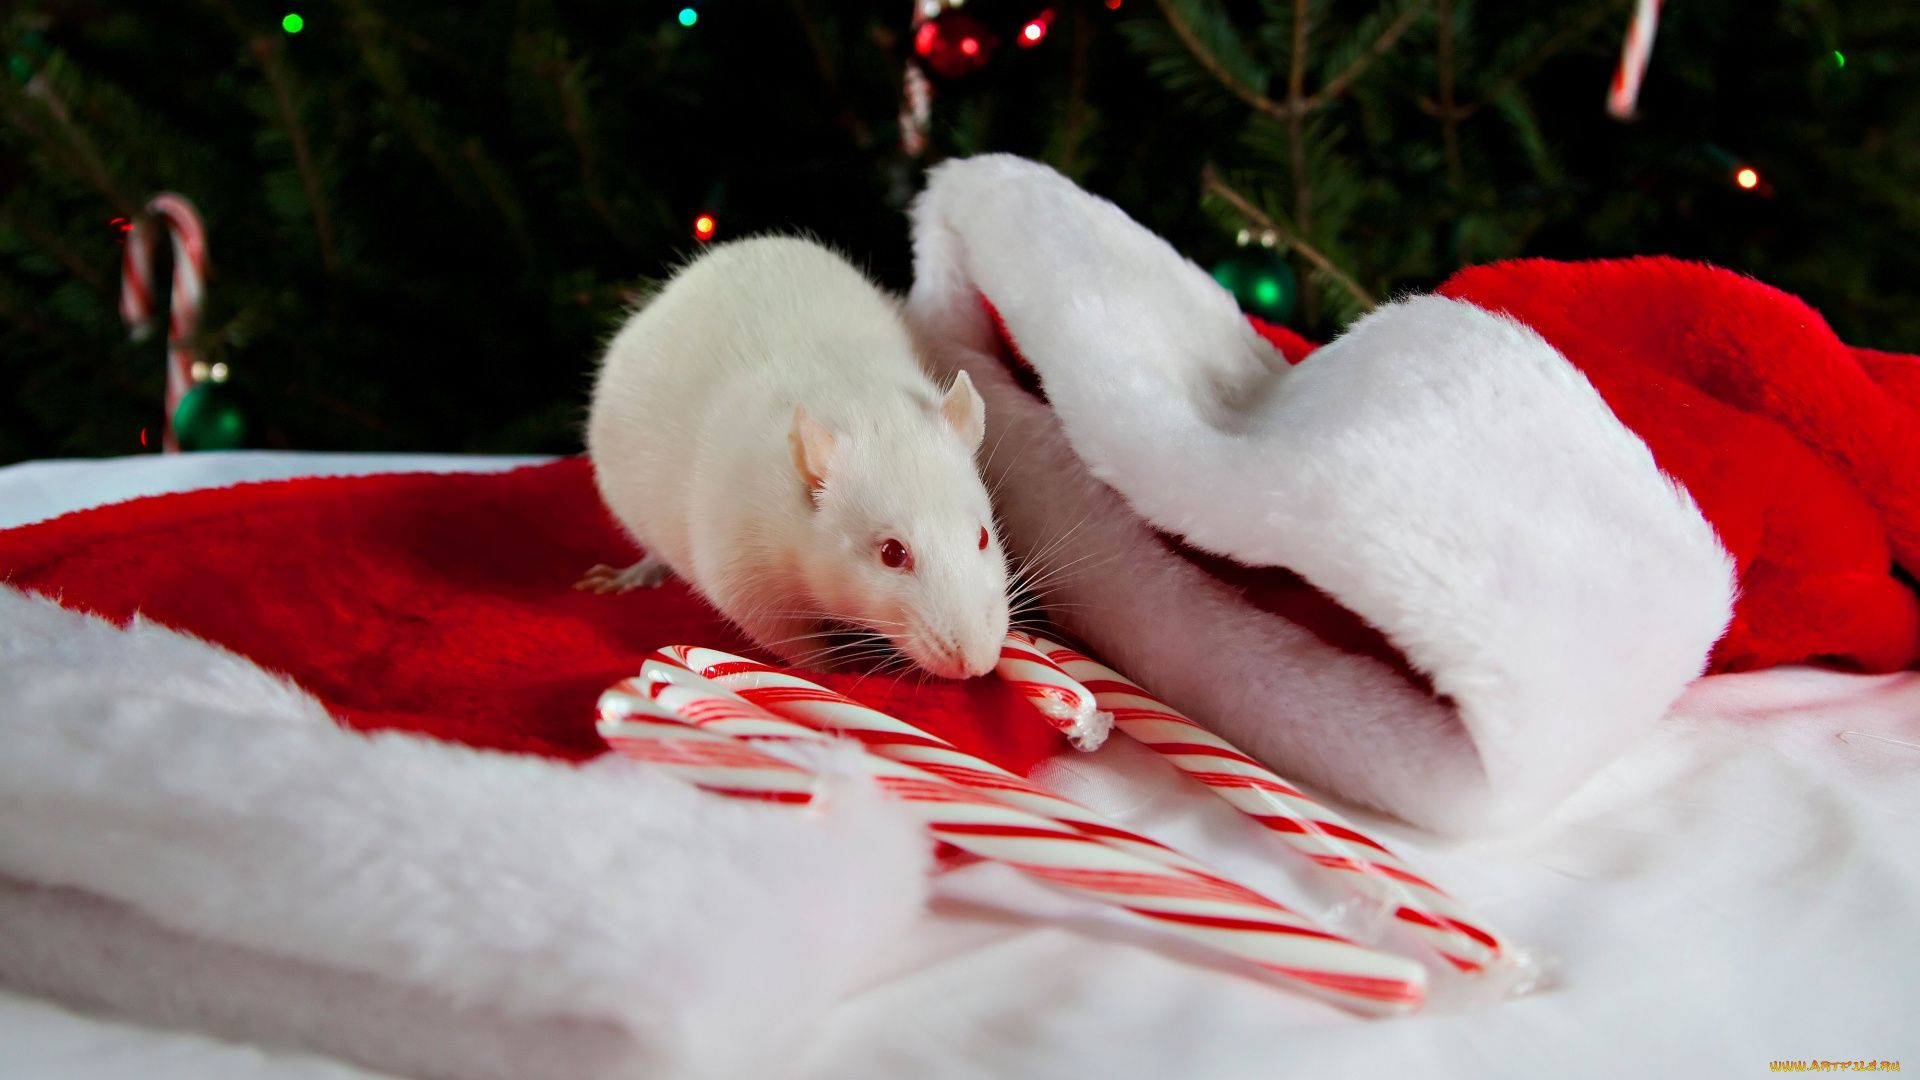 Christmas White Rat vertical wallpaper hd